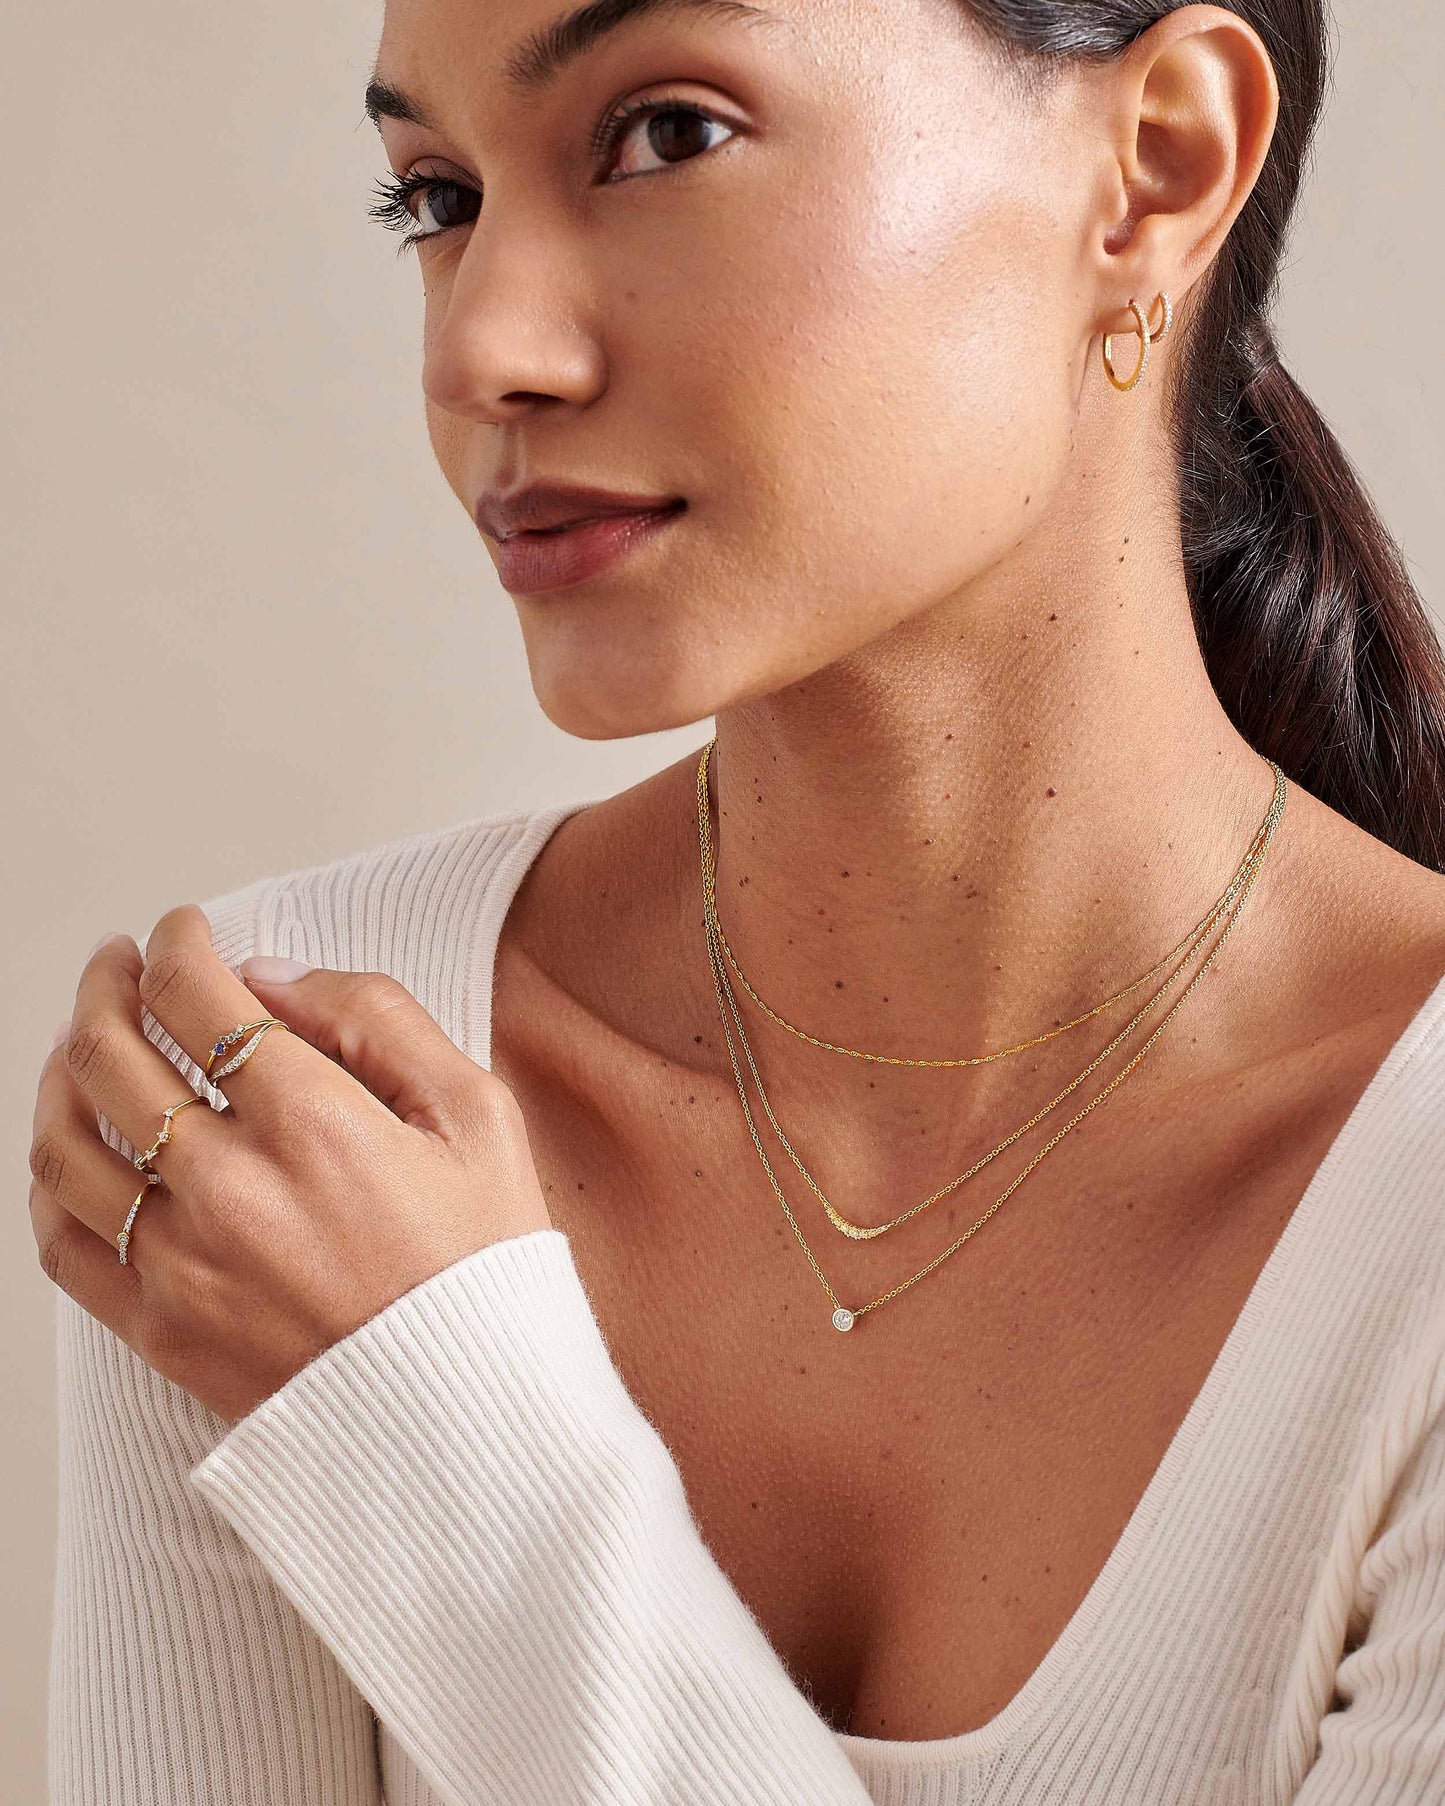 Large Solitaire Diamond Necklace